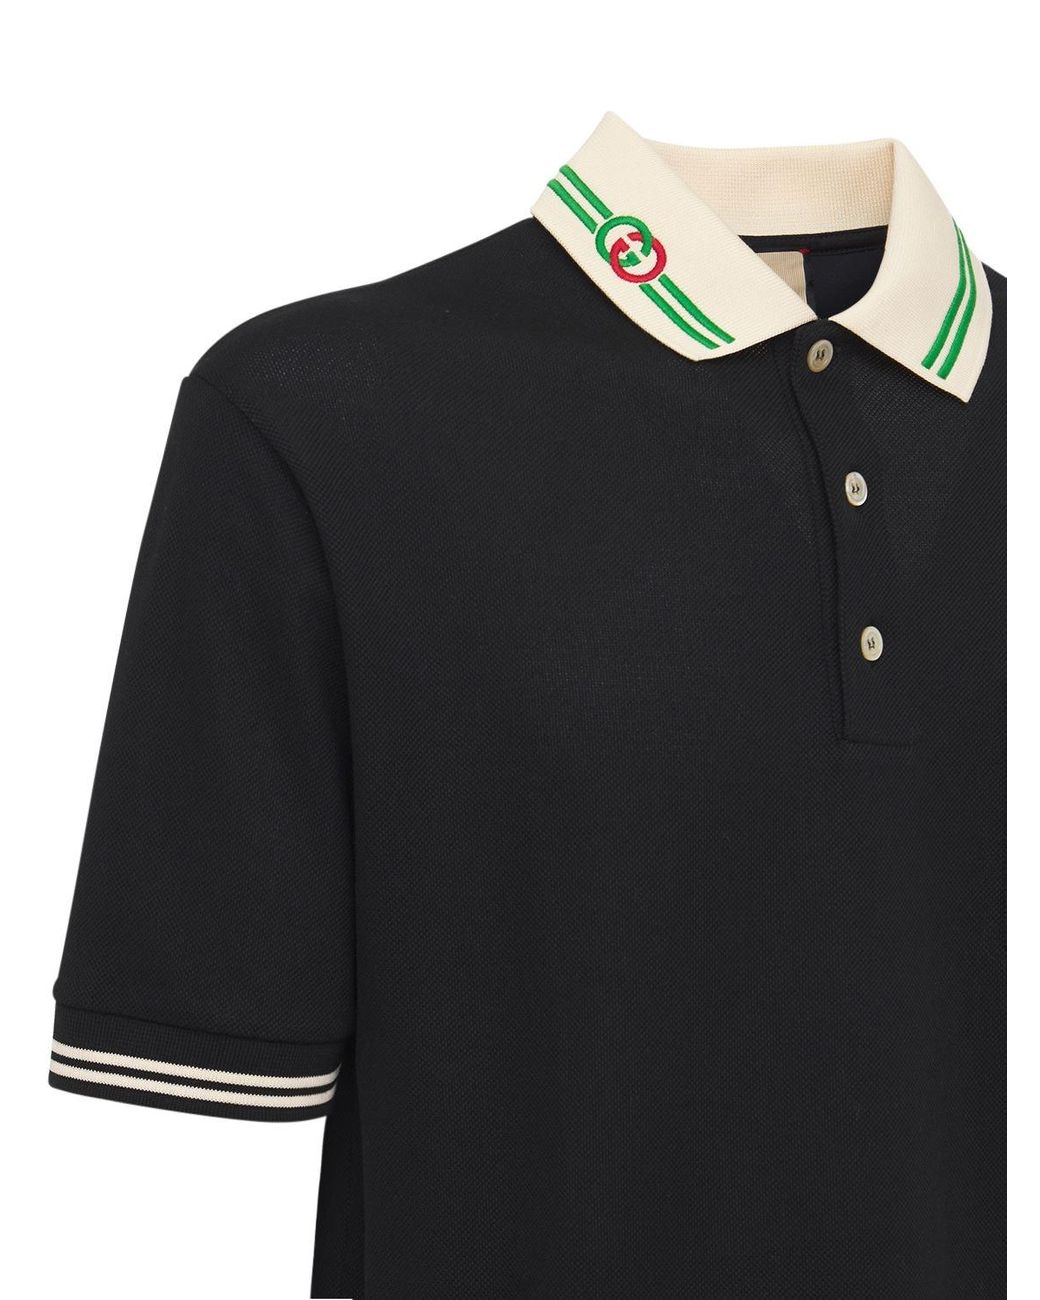 Gucci Interlocking G Cotton Piquet Polo in Black for Men | Lyst